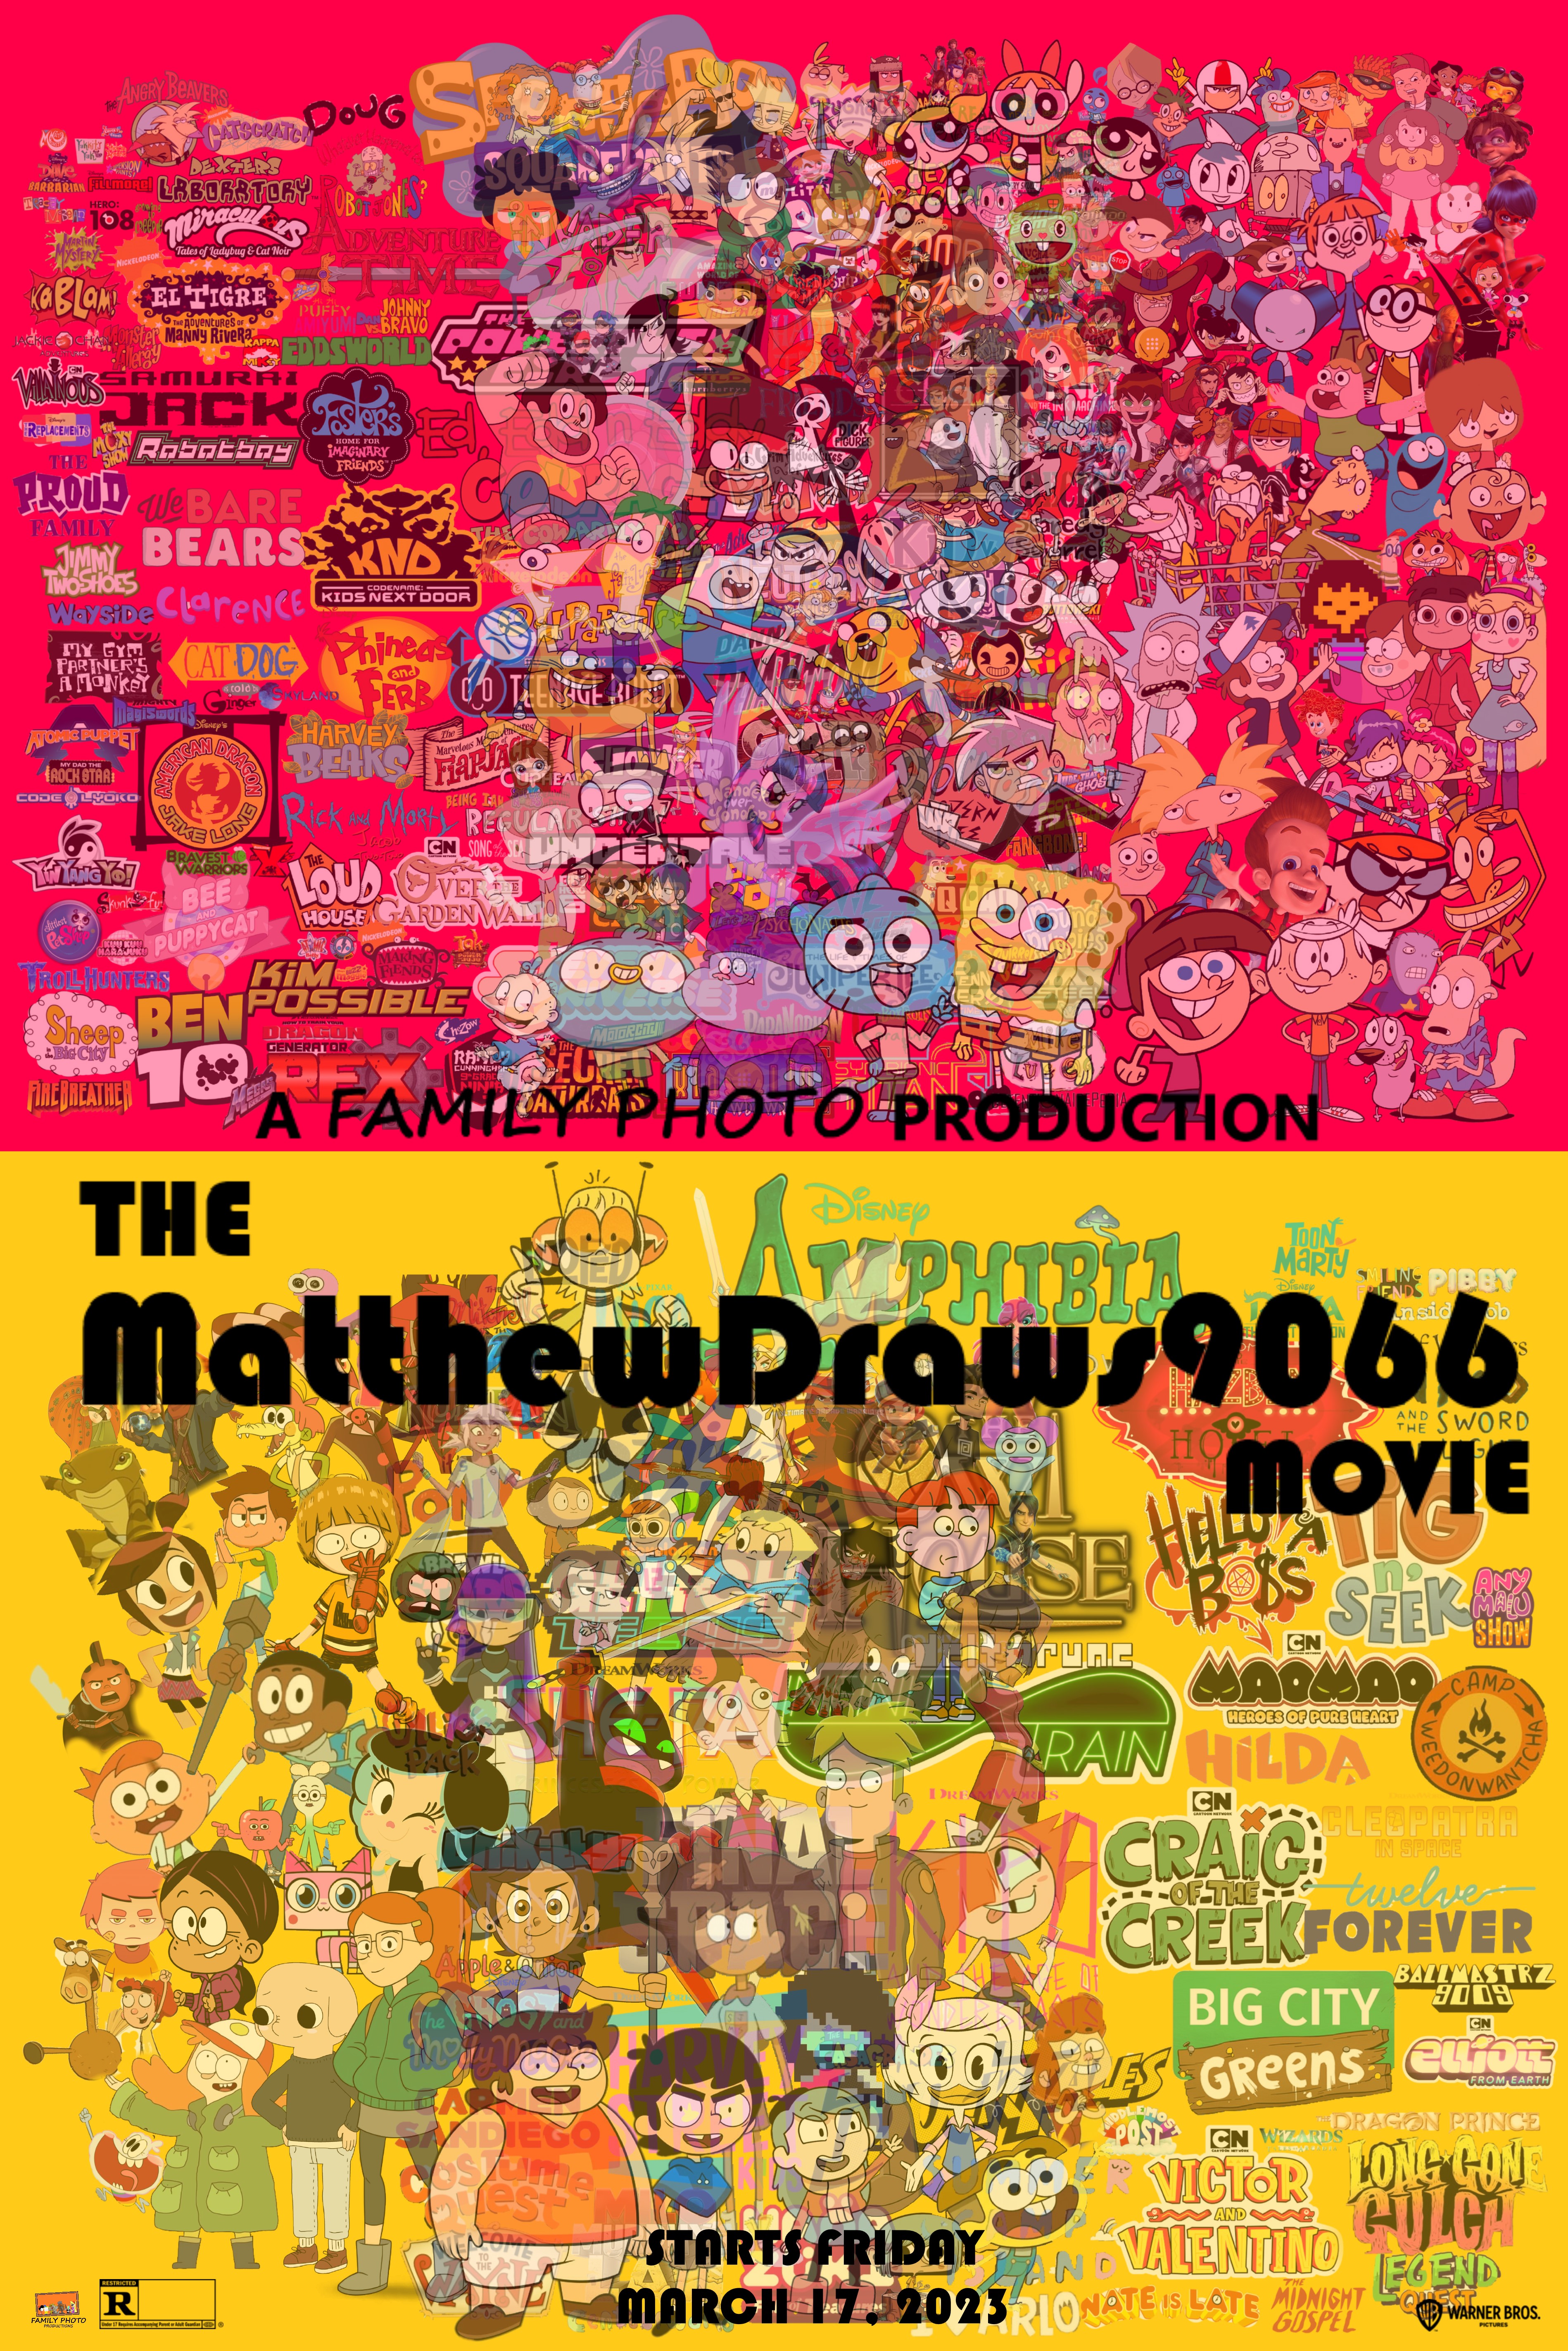 Cartoon network tv shows 1996-2019 by chikamotokenji on DeviantArt